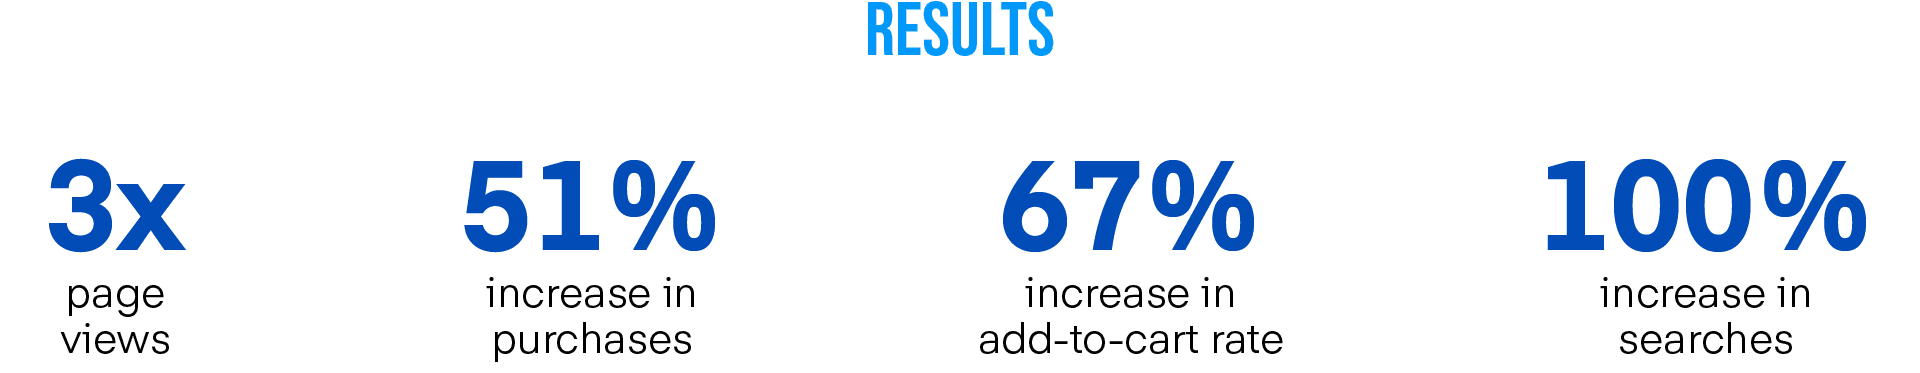 Edifier Case Study results